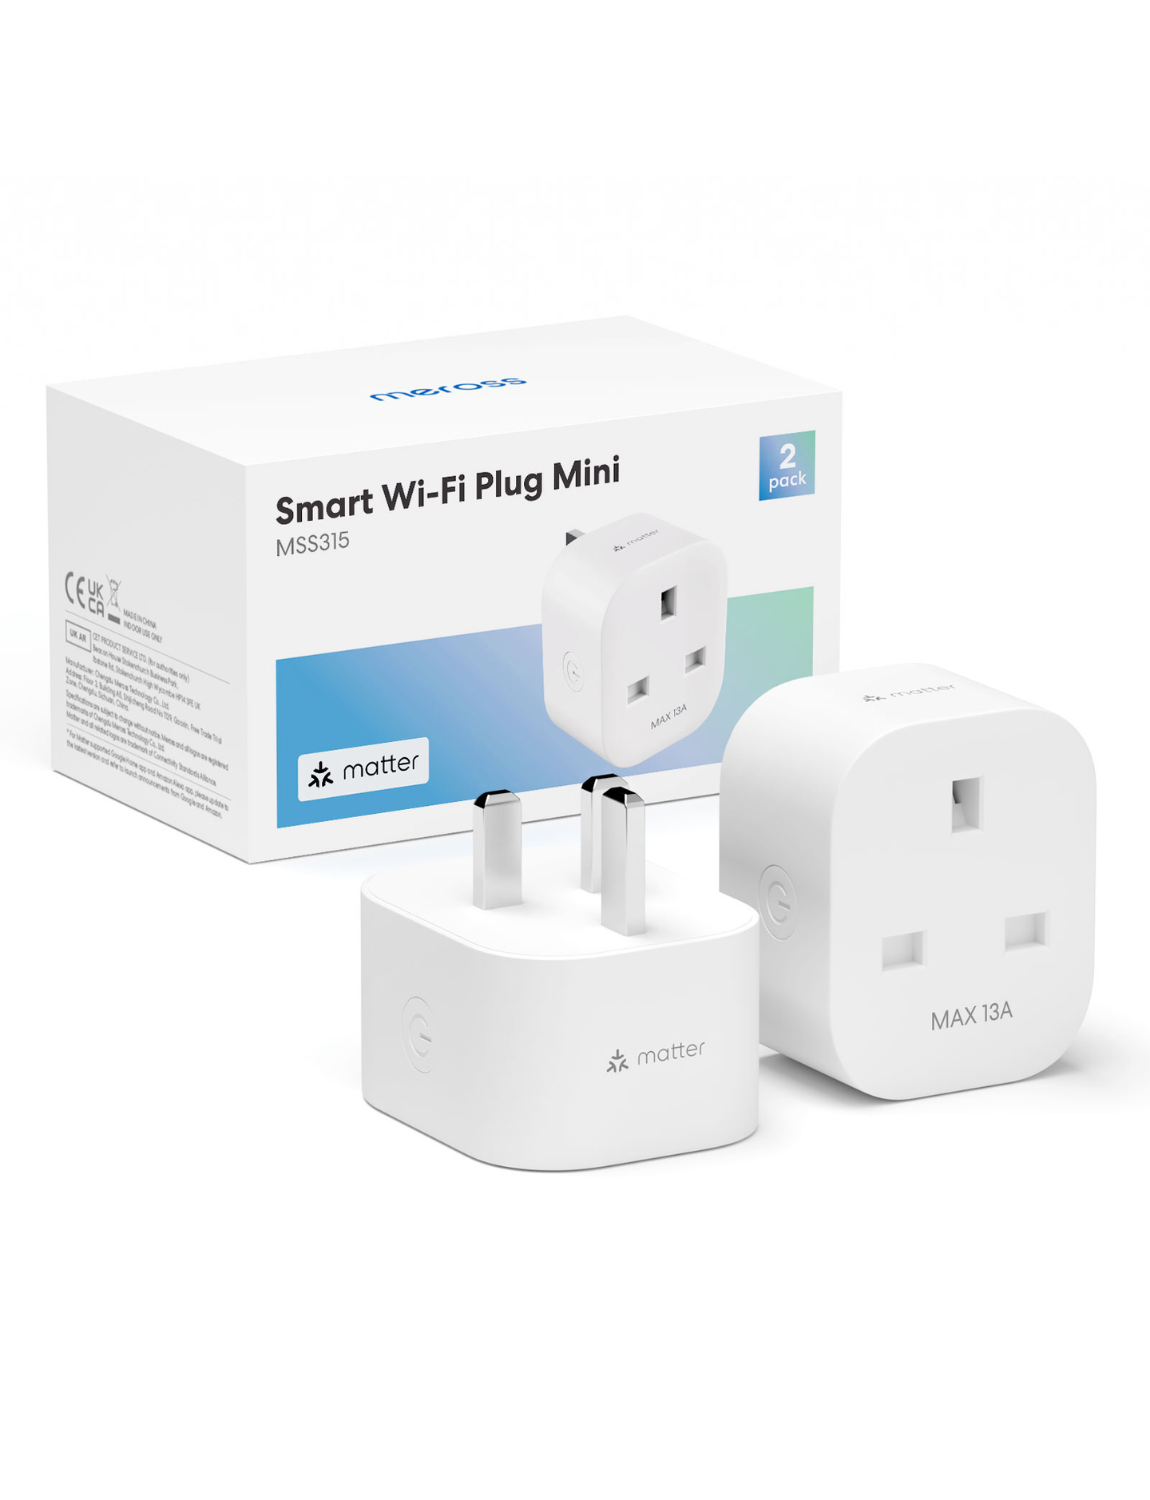 Meross Matter Smart Wi-Fi Plug with Energy Monitor, MSS315 (UK Version), 2 Pack